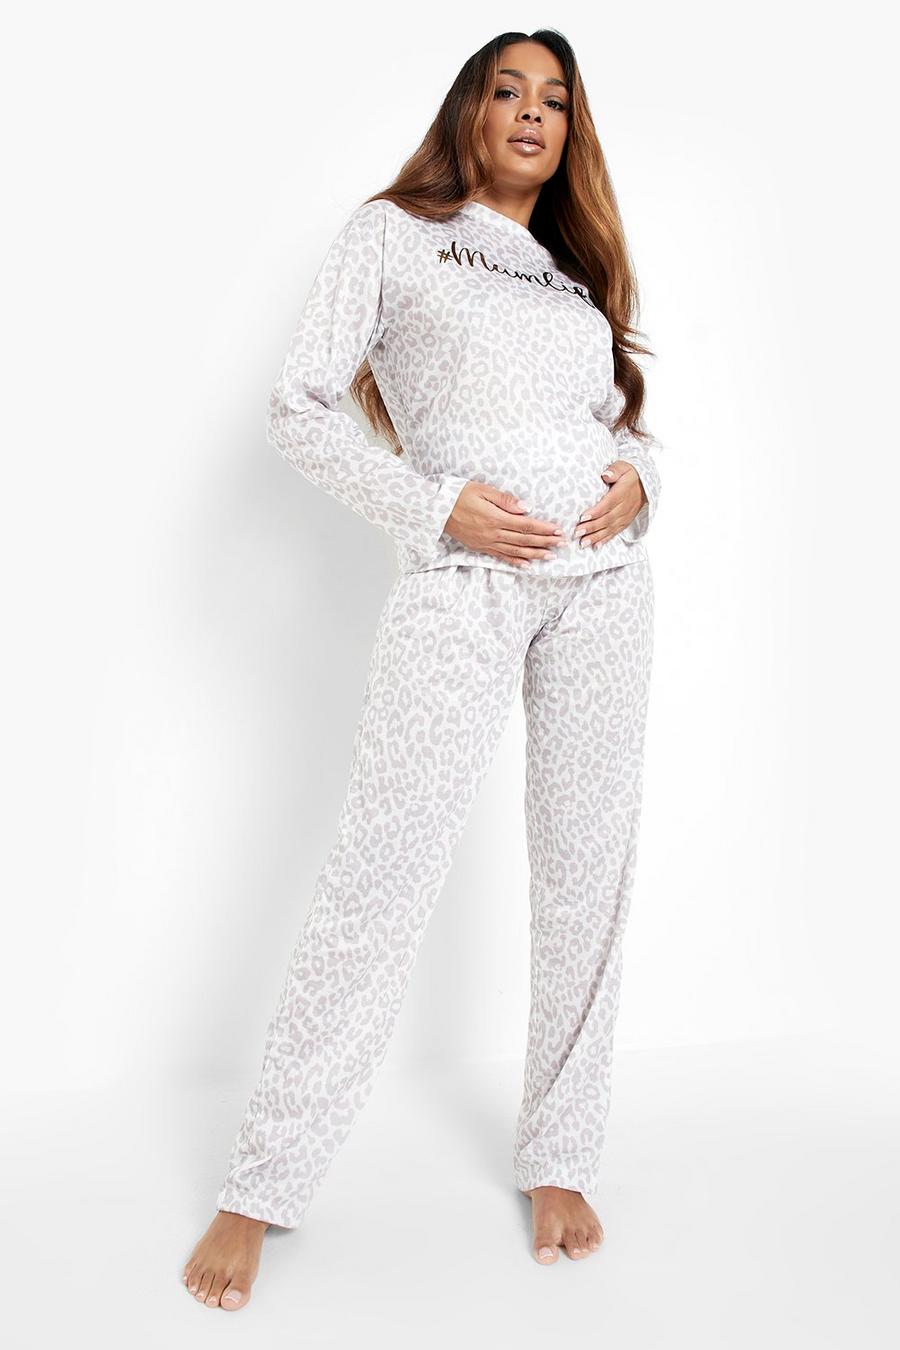 Umstandsmode Pyjama-Set mit Mum-Life Slogan in Leopardenprint, Brown